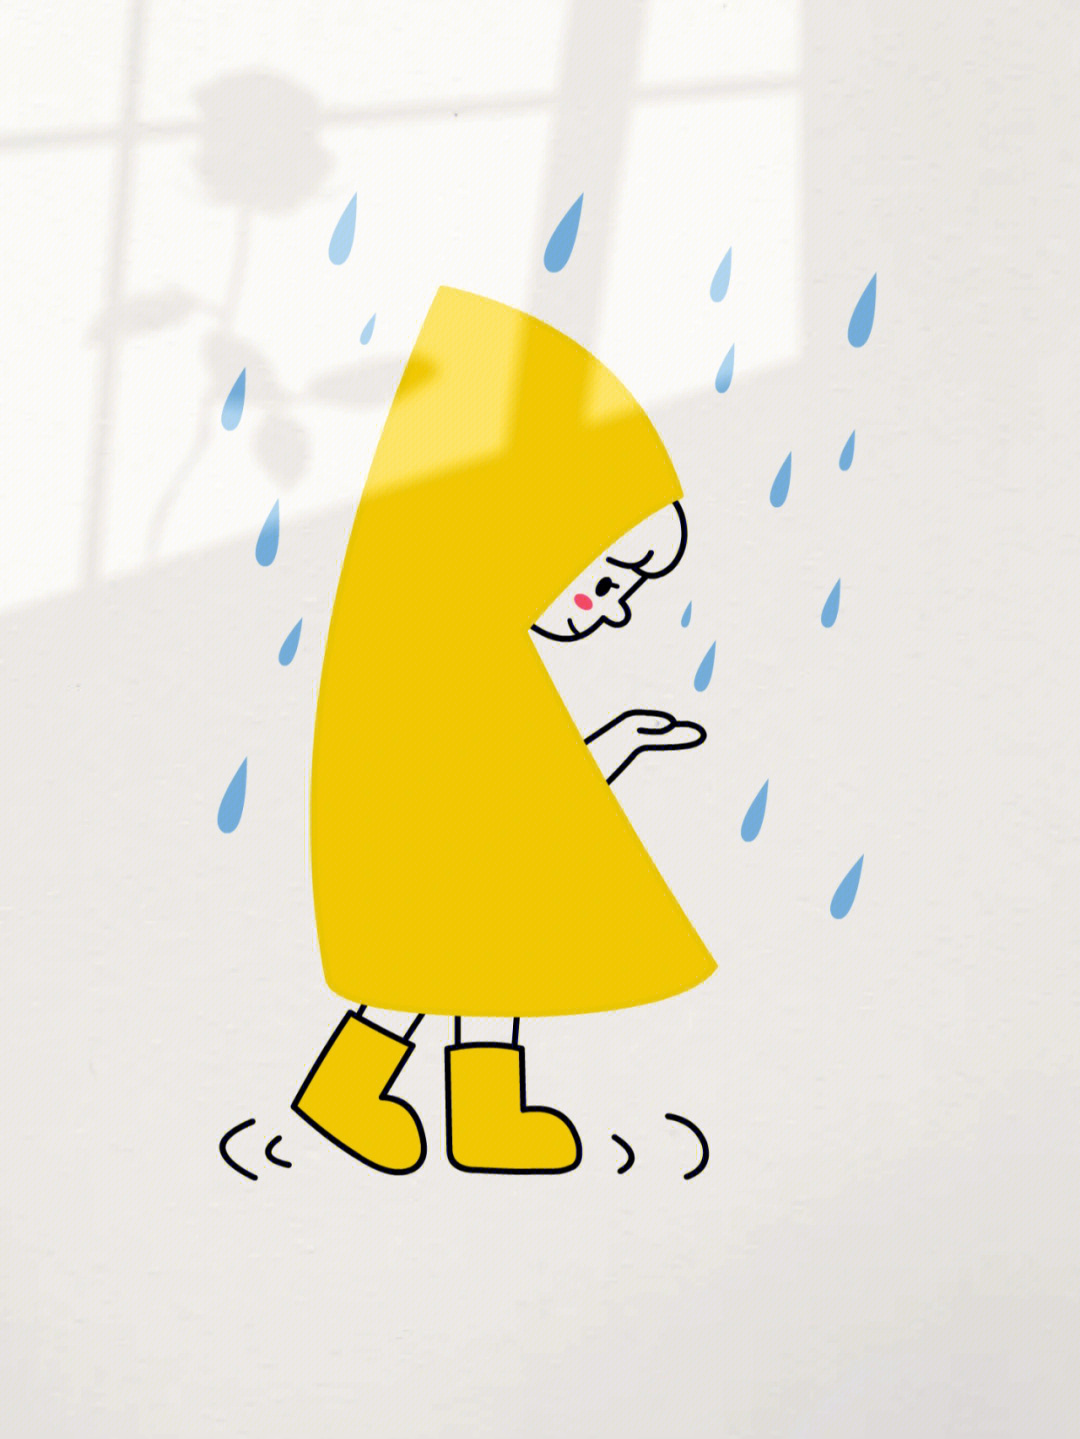 raincoat简笔画图片